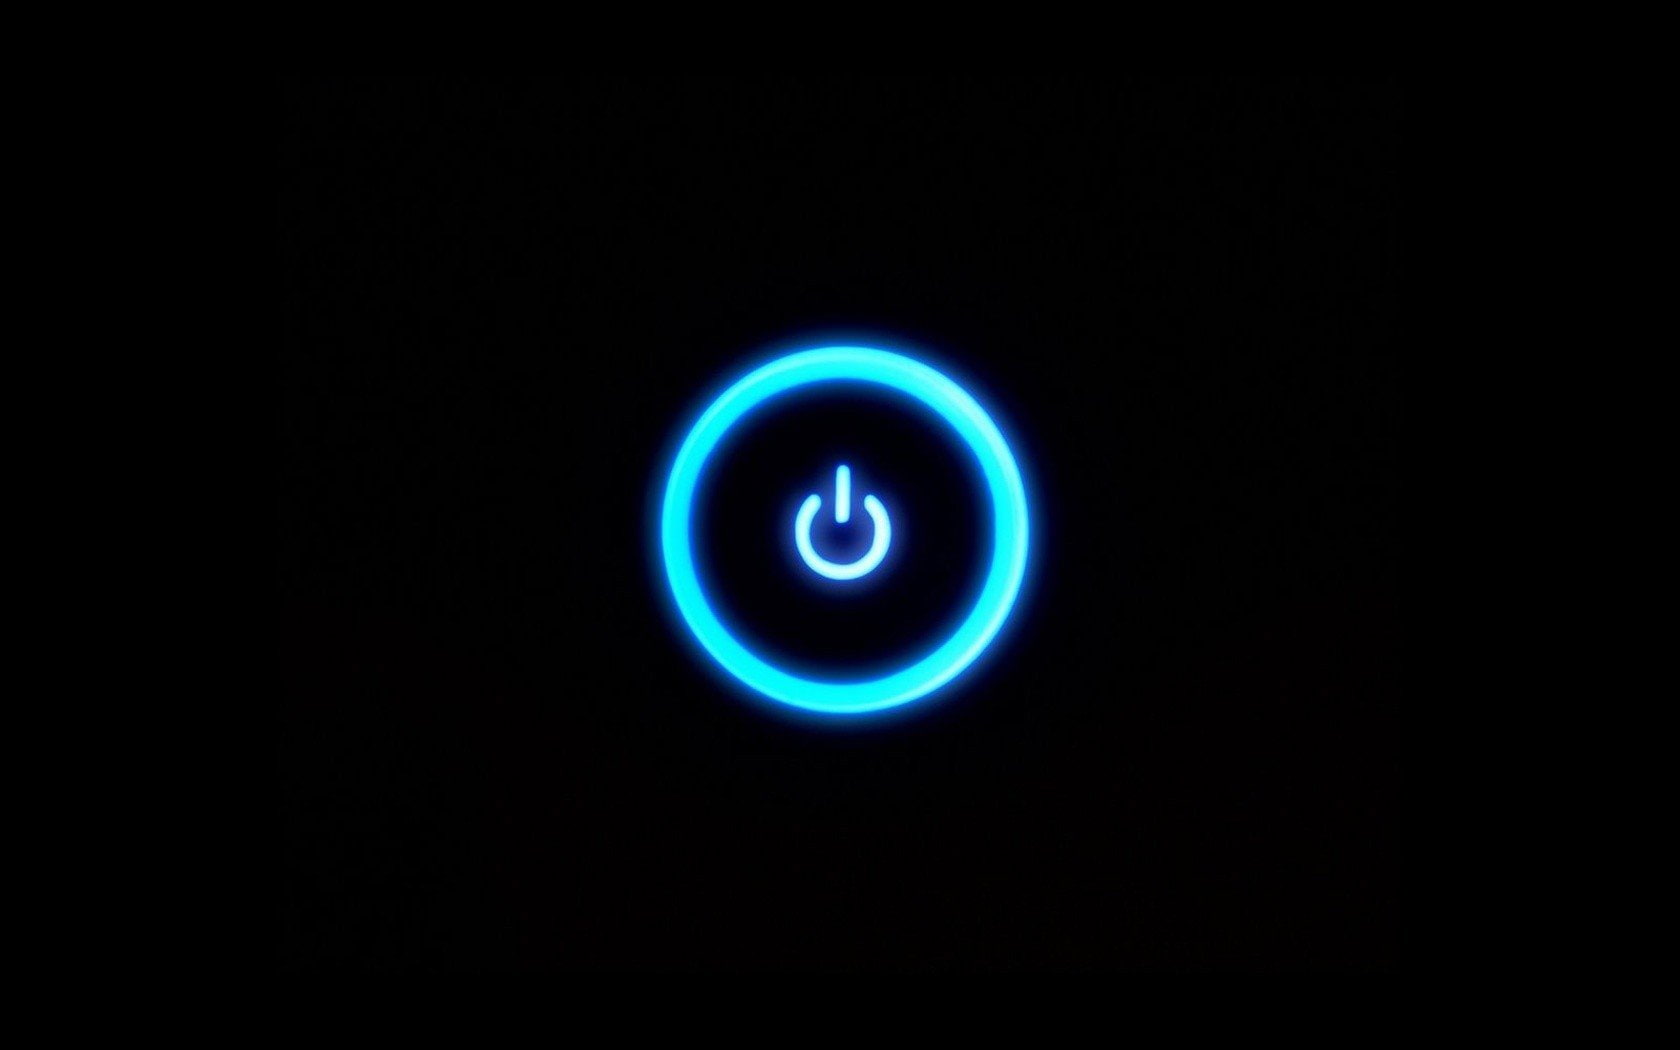 power buttons, blue, illuminated, night, communication, black background